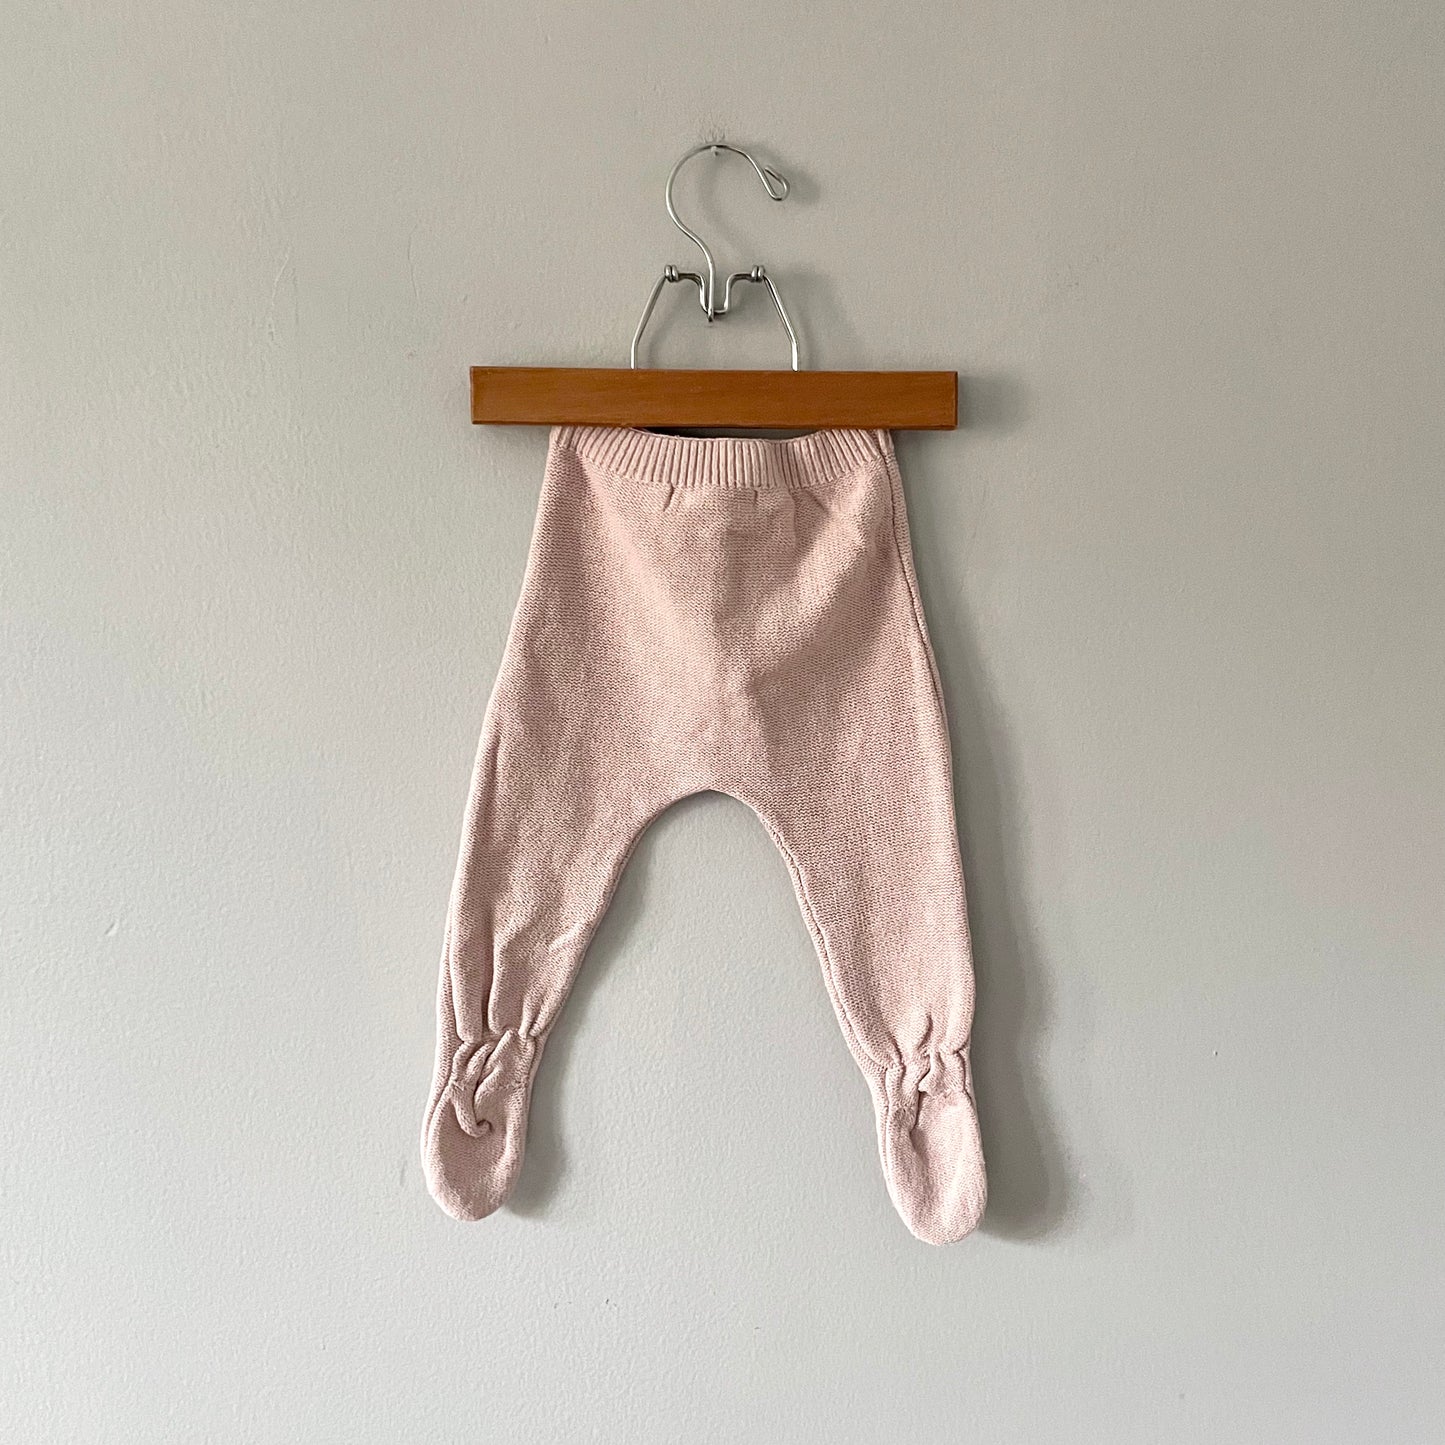 Zara / knit pink footed pant / 6-9M